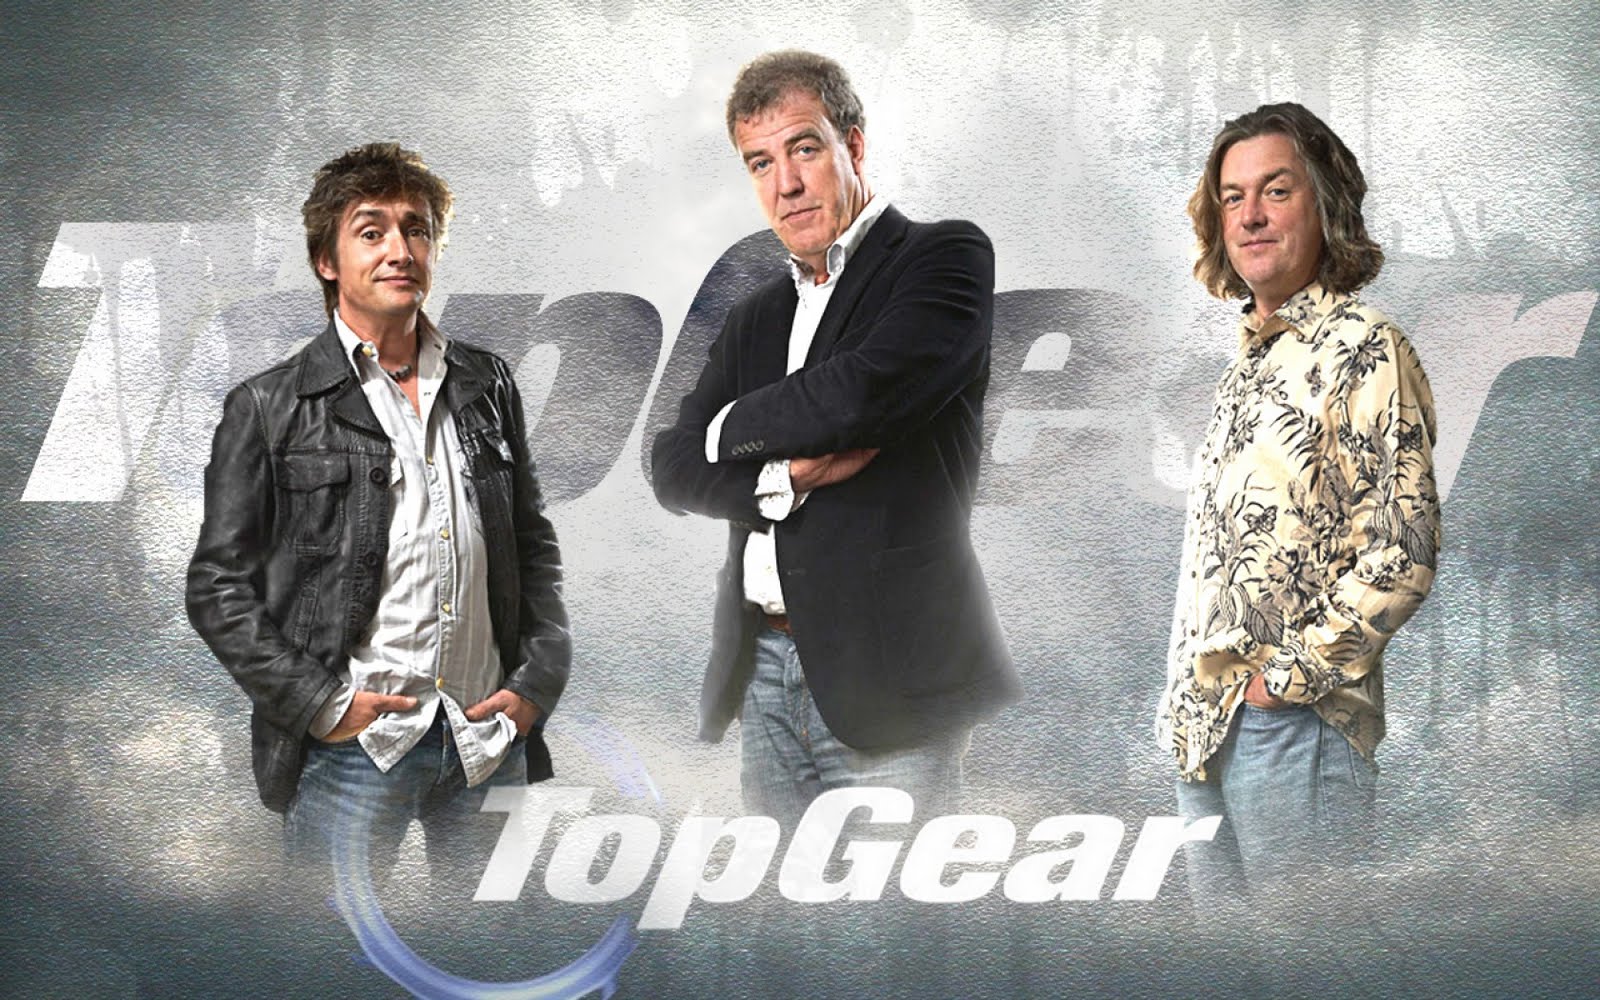 Top Gear a Bra, (Torino) la foto diventa virale